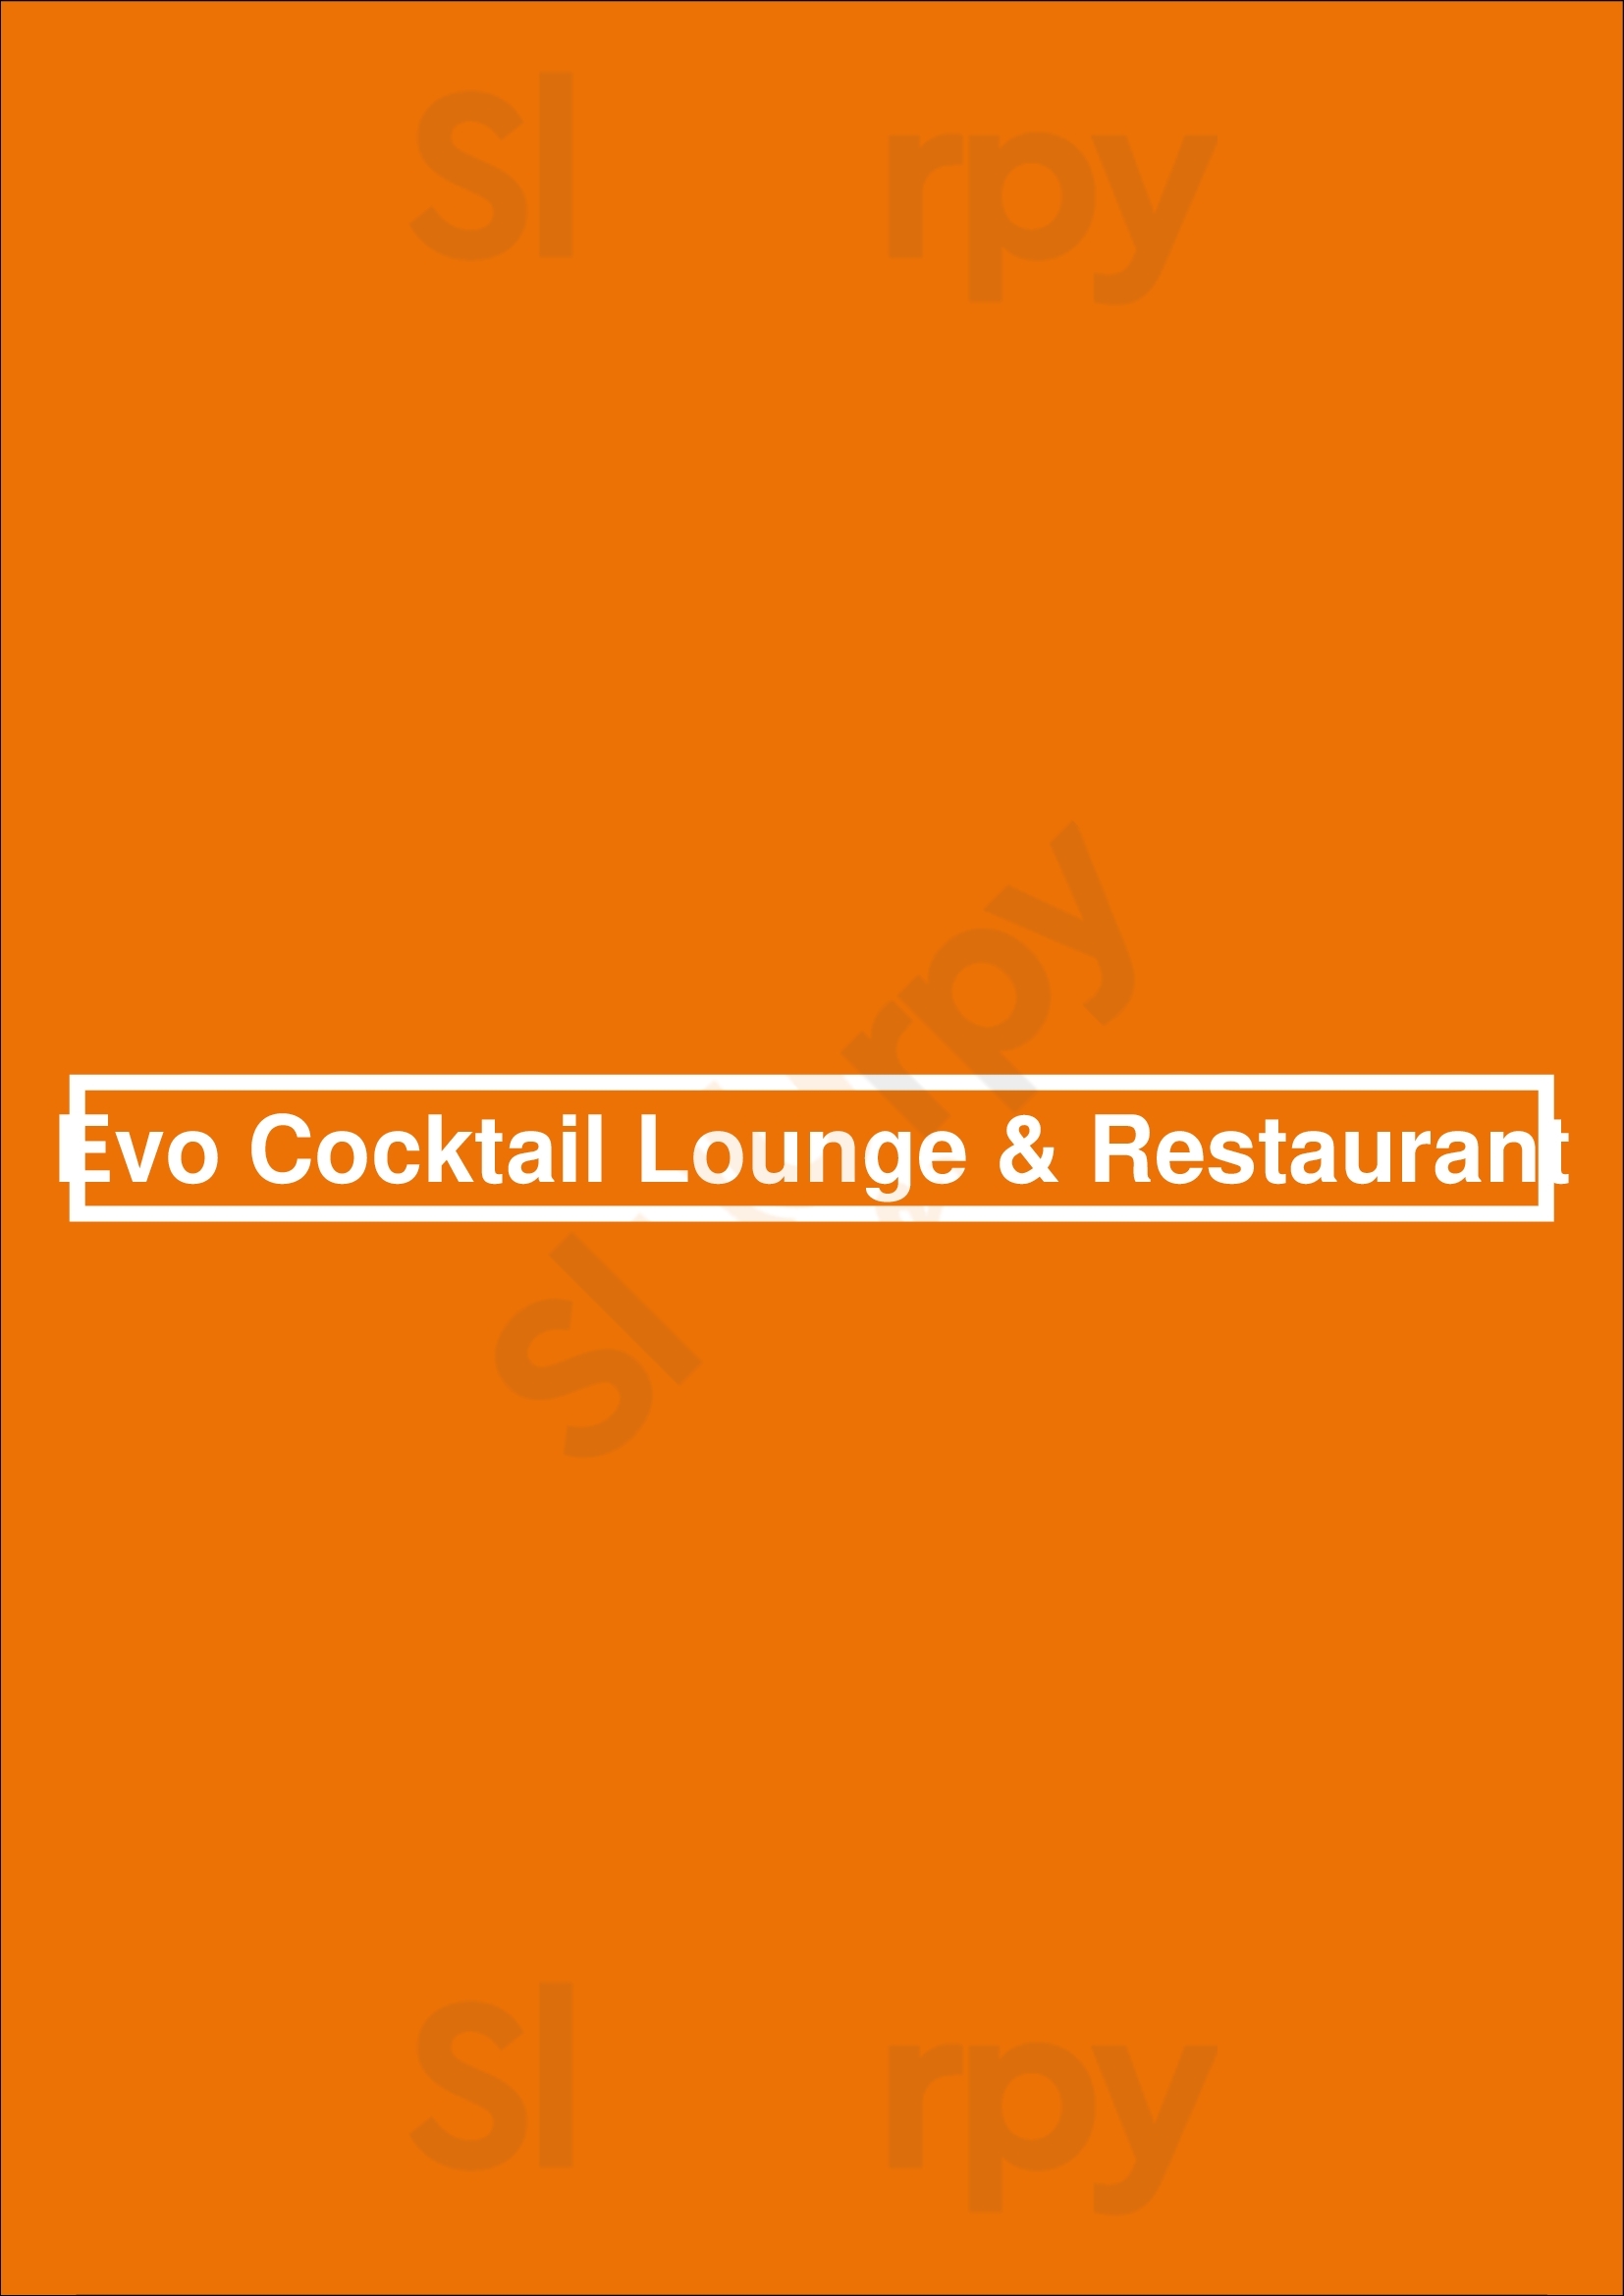 Evo Cocktail Lounge & Restaurant Bronx Menu - 1